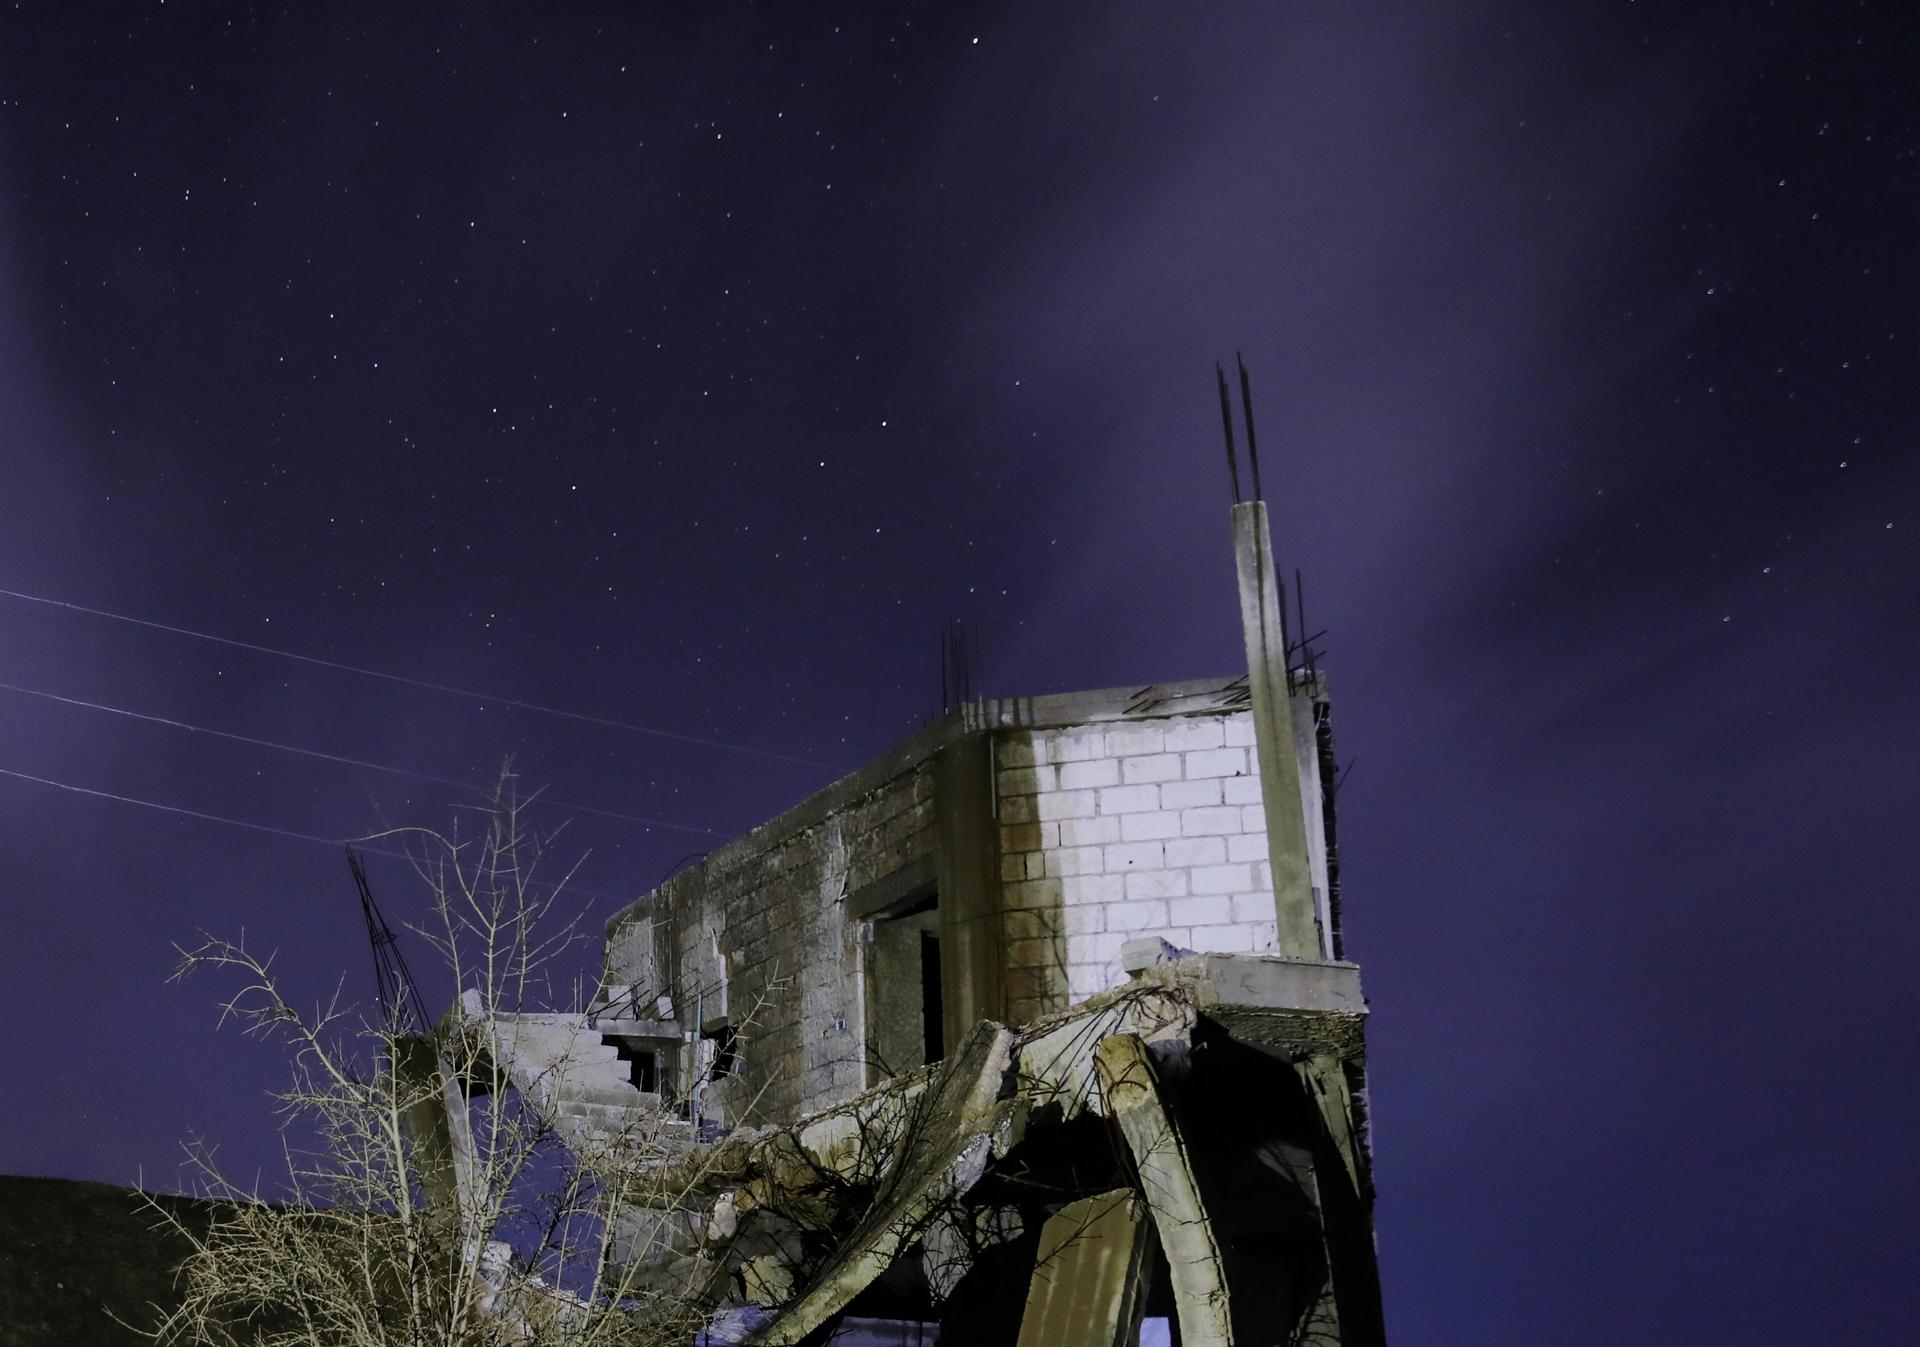 Destroyed home against dark blue night sky